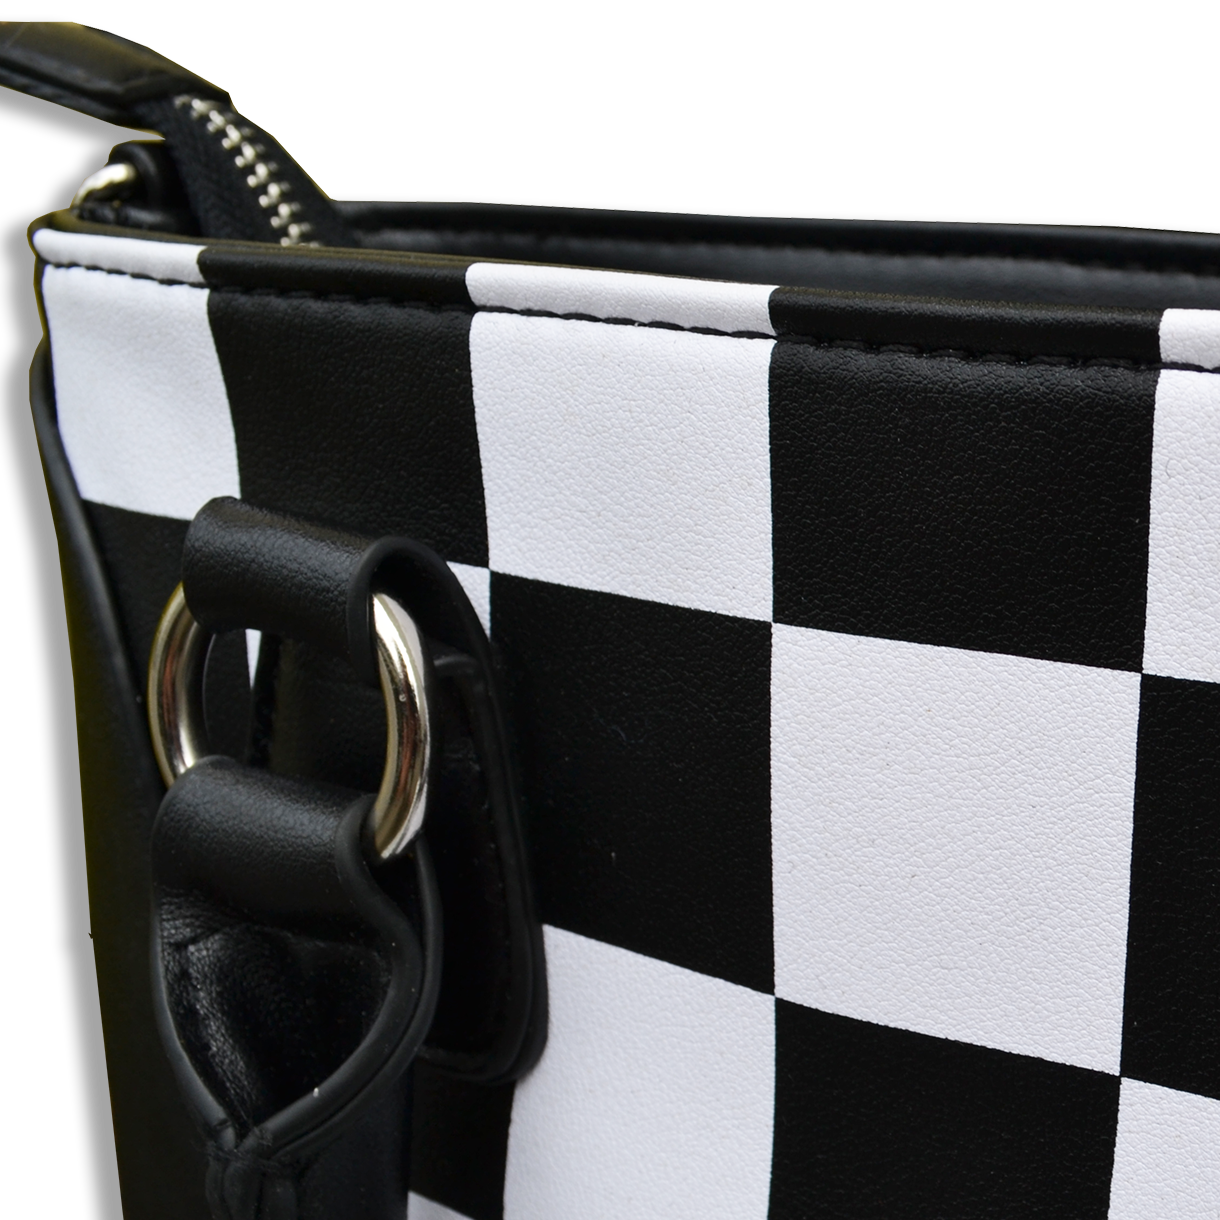 Checkered Handbag  Fearless Race Wear